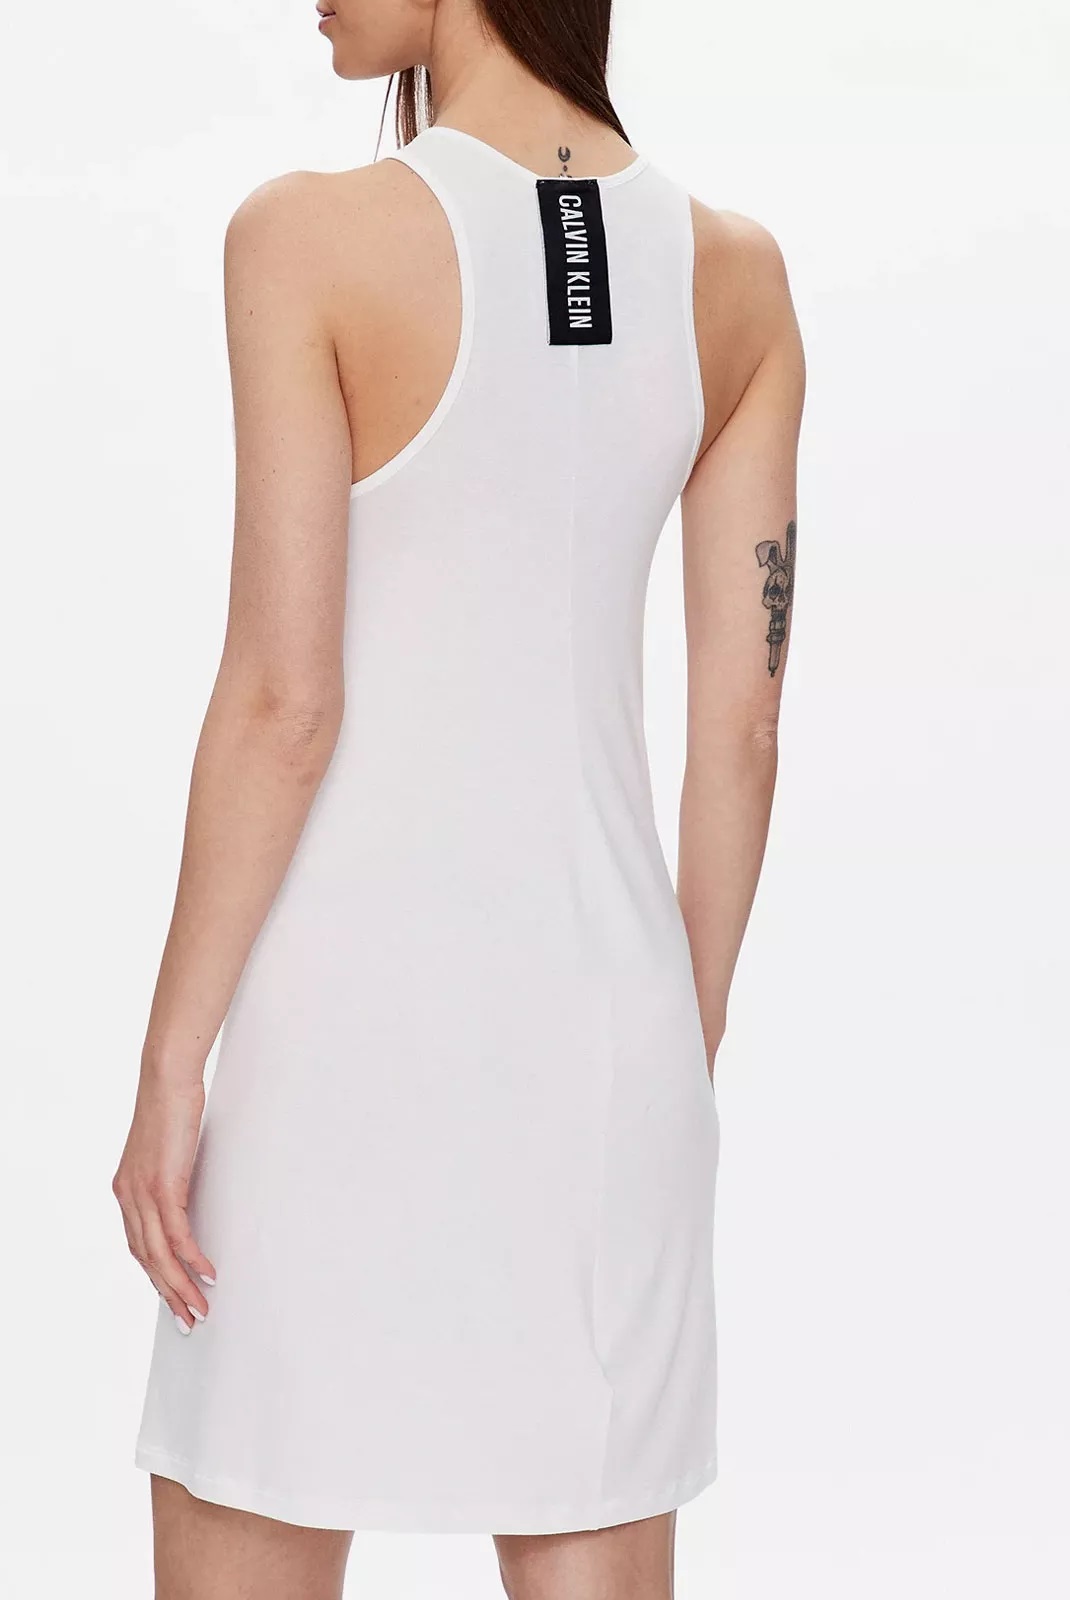 Calvin Klein dámské šaty Tank bílé s logem Velikost: M